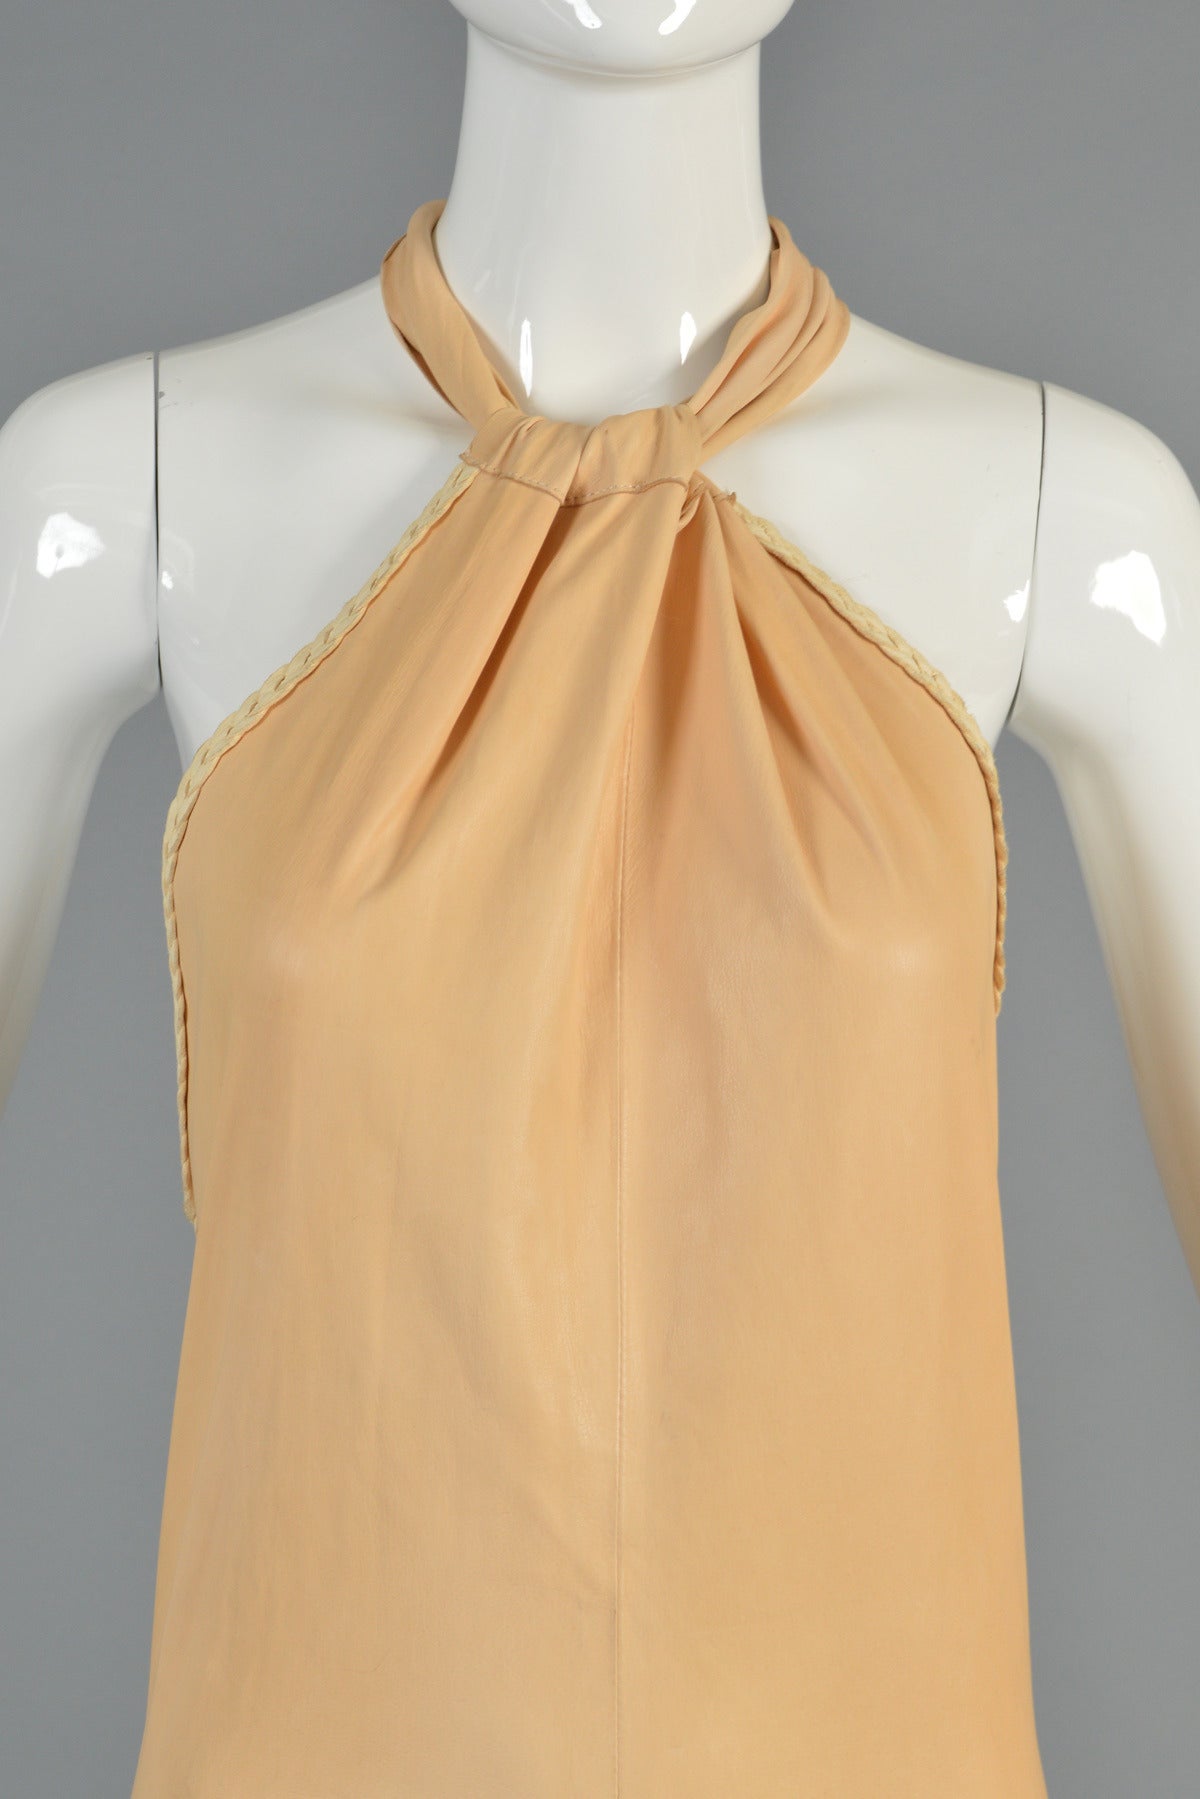 Women's Seductive Jean Claude Jitrois Bum-Skimming Leather Halter Dress